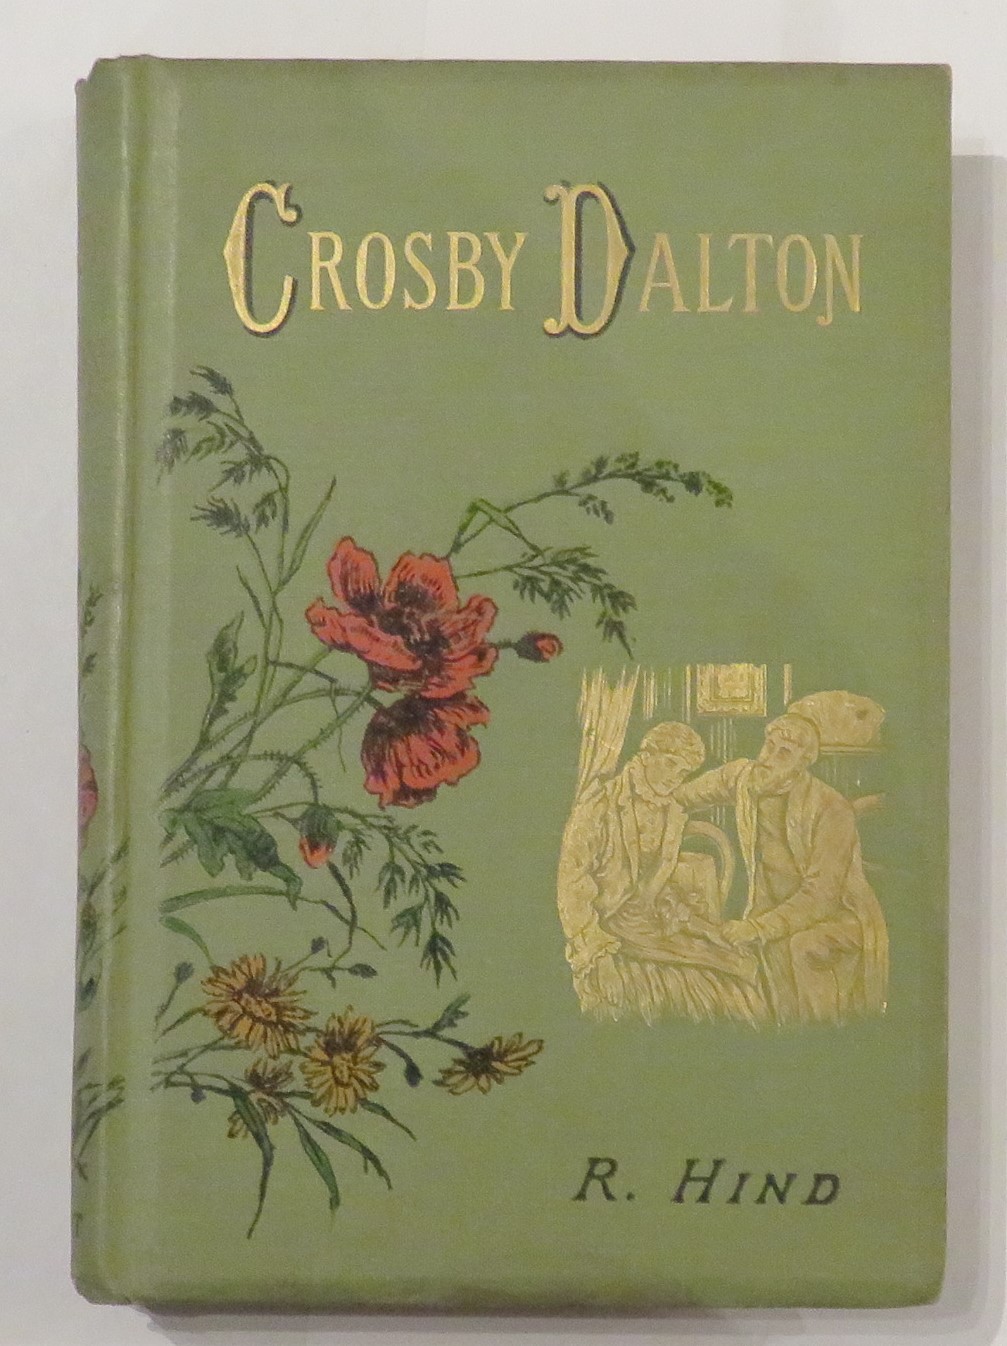 Crosby Dalton: Local Preacher and Village Demagogue